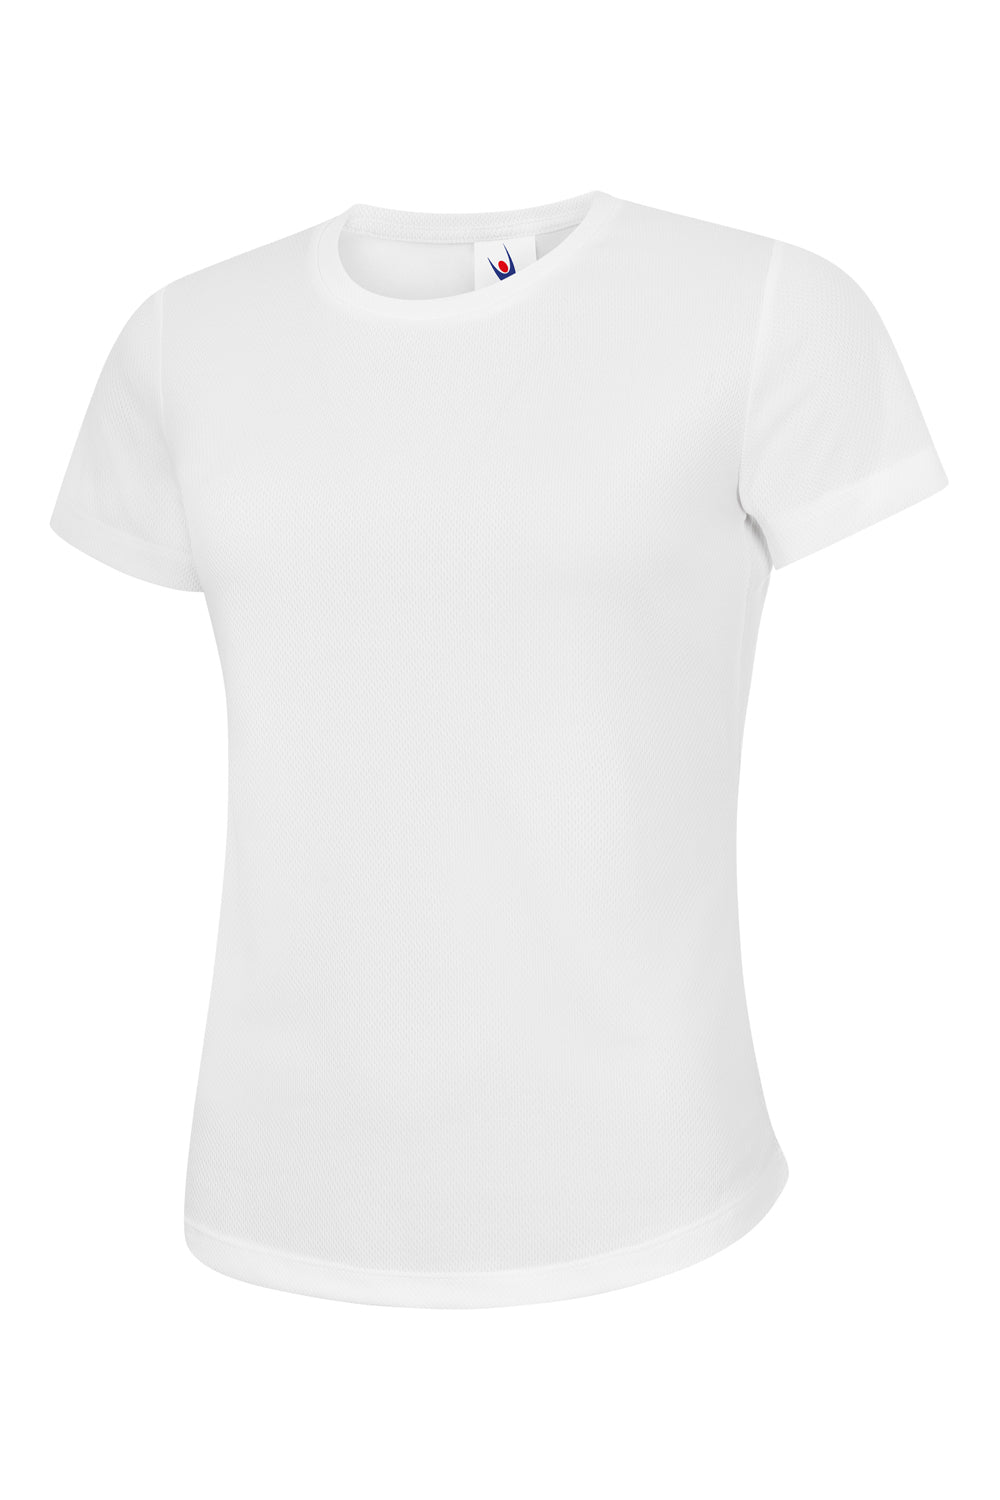 Uneek Ladies Ultra Cool T Shirt UC316 - White